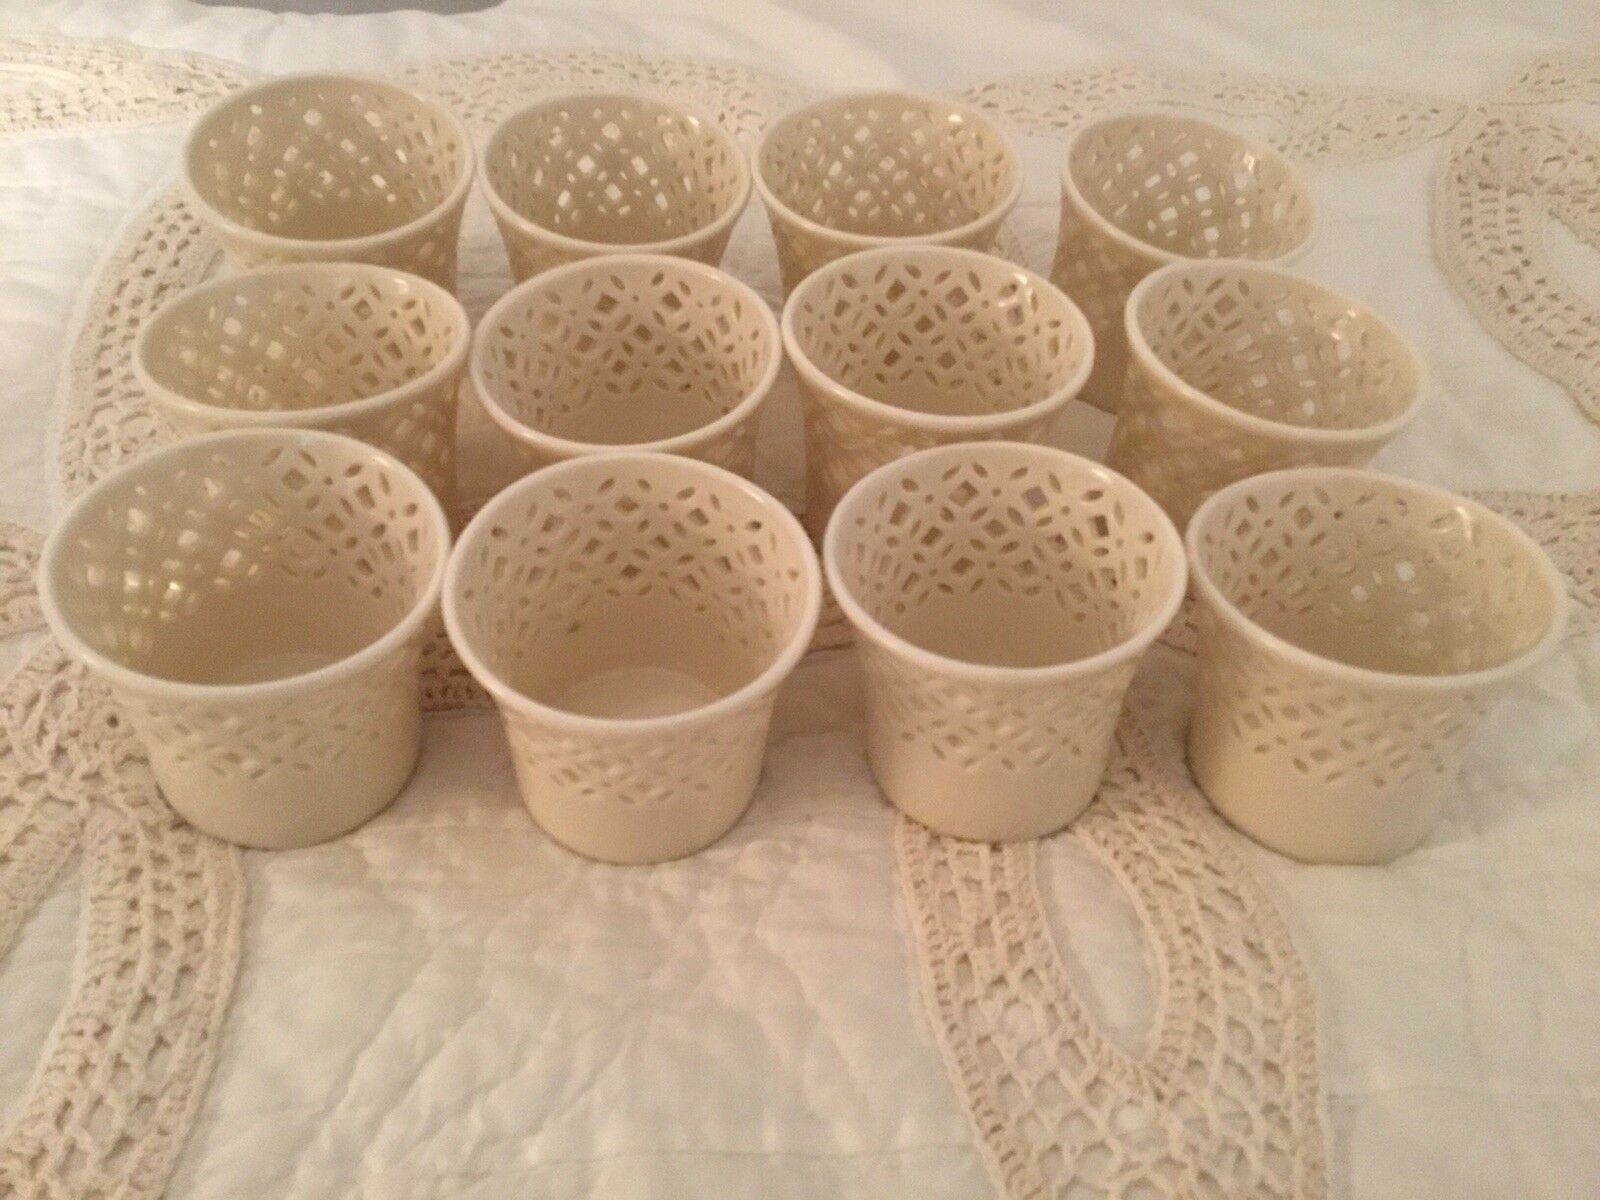 Godinger Porcelain Votive Candle Holder Lot (12 Pieces), Ivory, Very Nice!